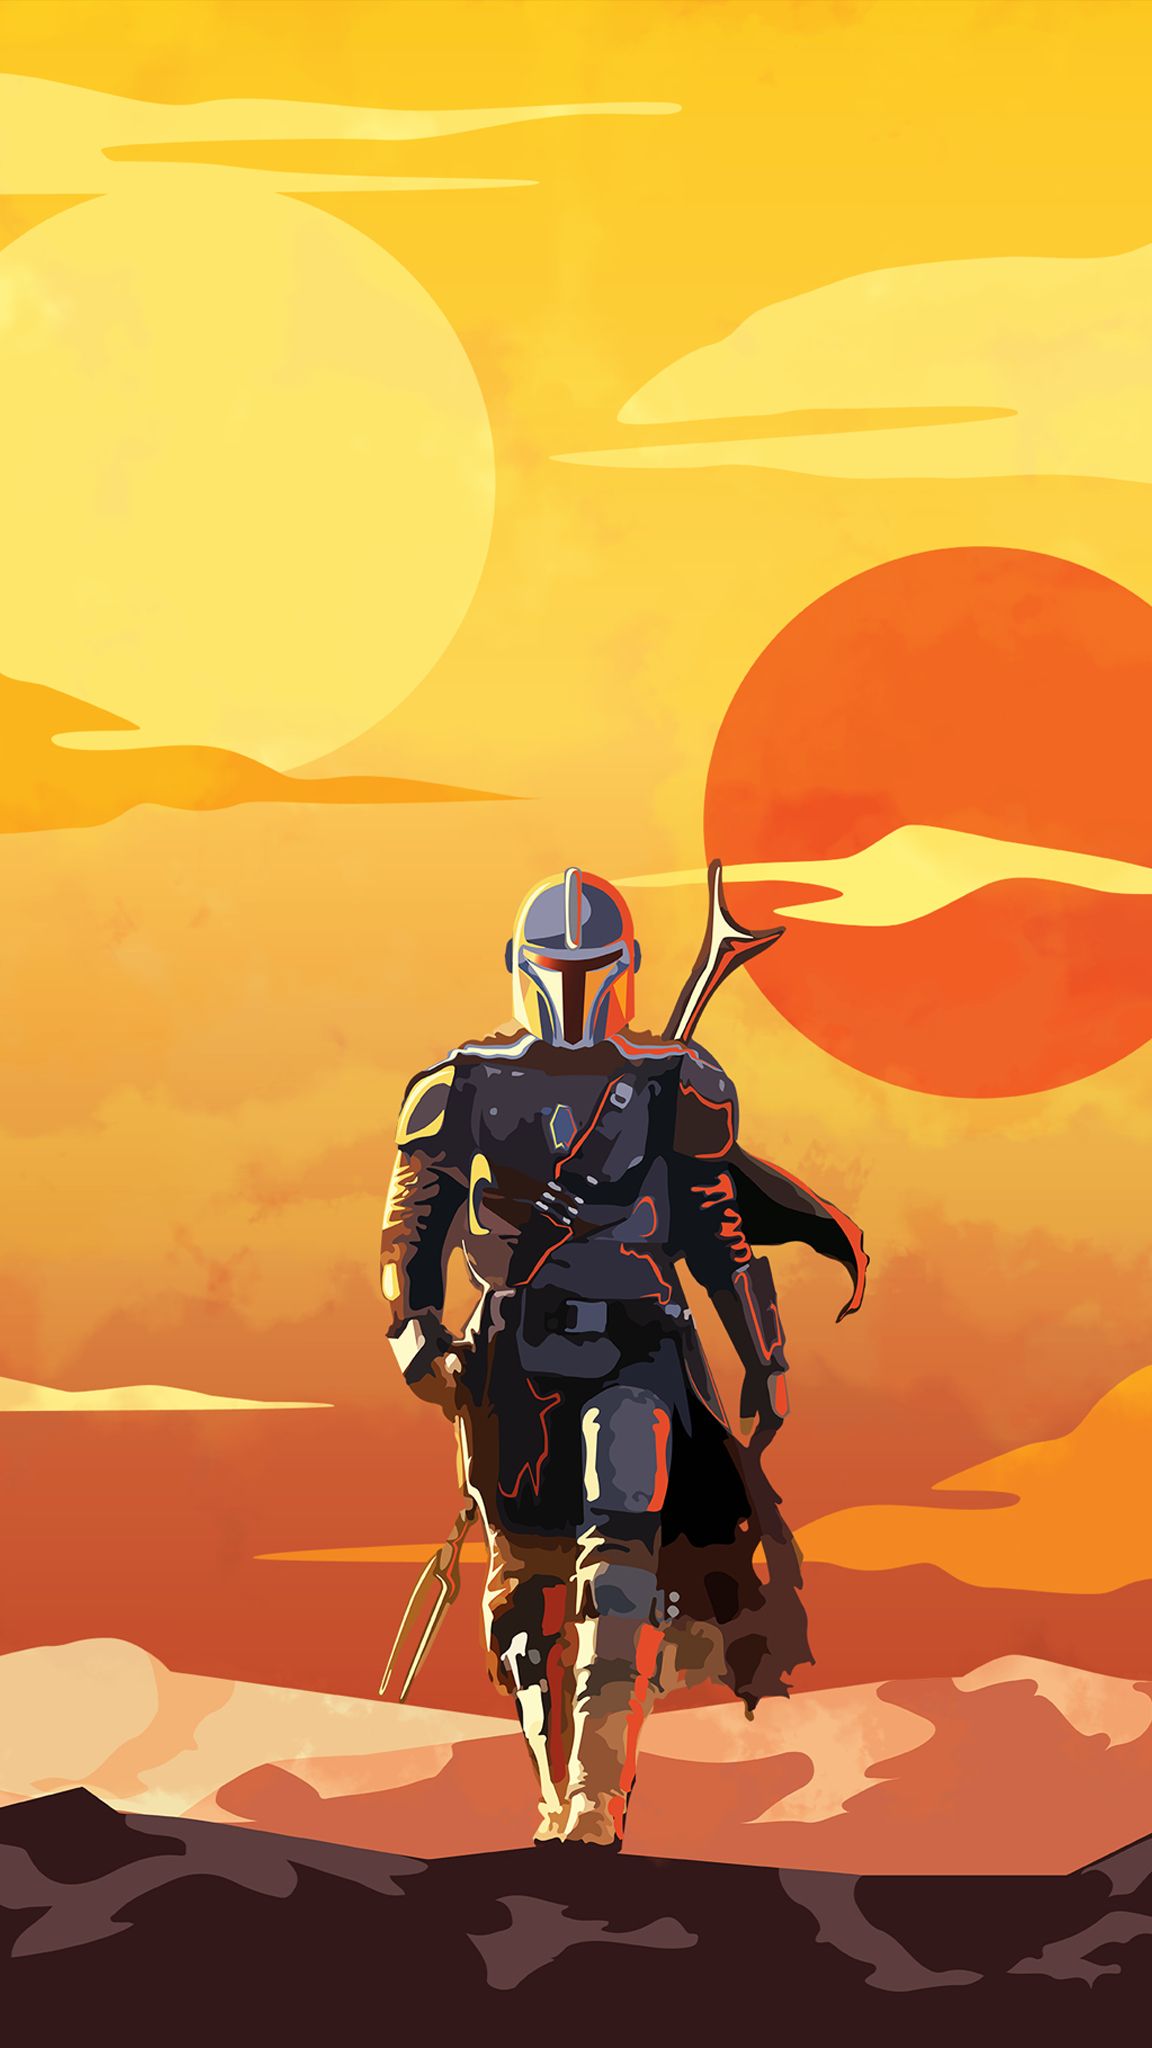 A man in armor walking through the desert - Star Wars